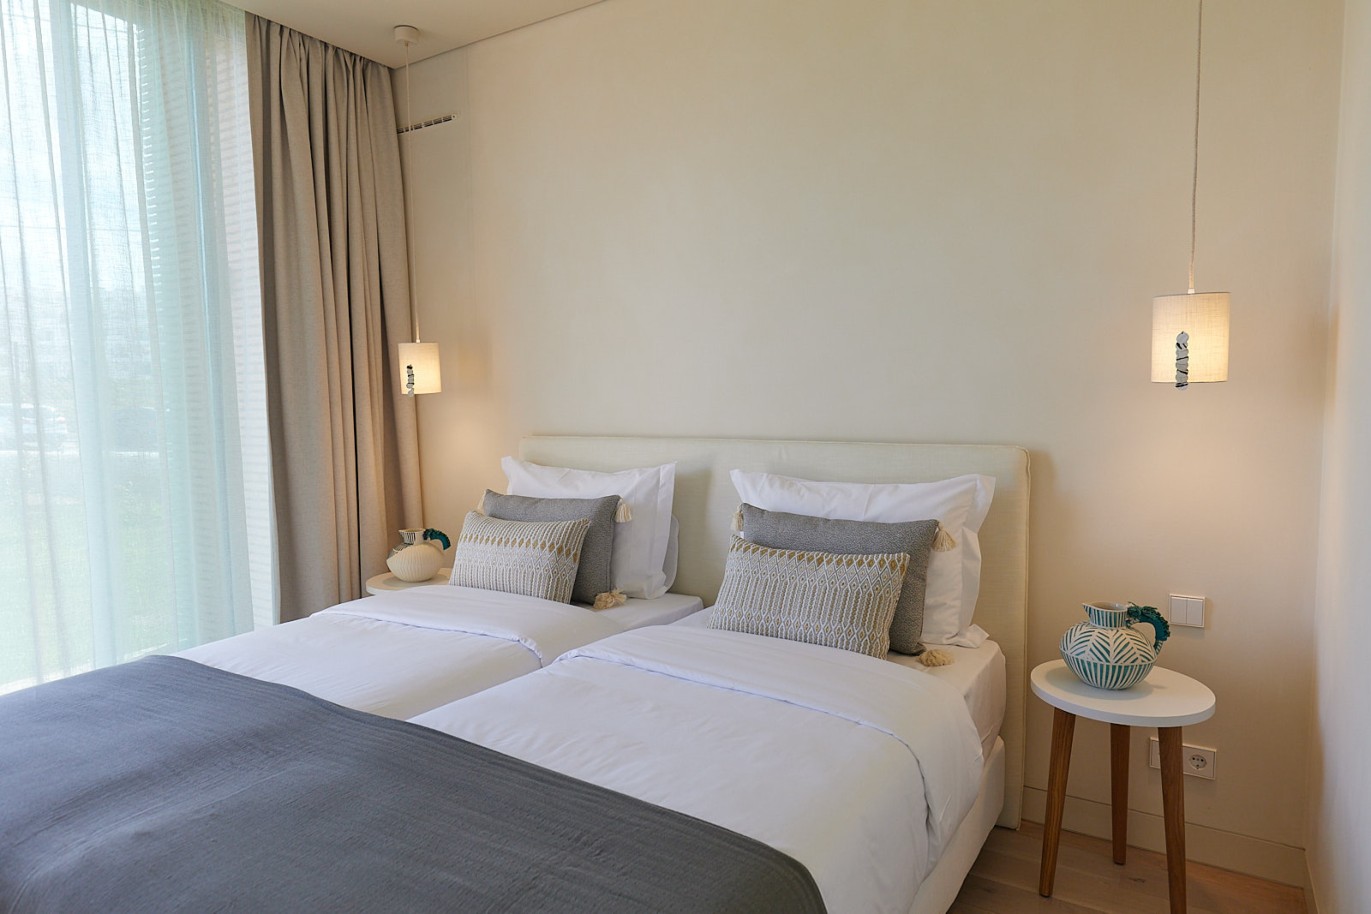 2 bedroom apartment in resort, for sale in Porches, Algarve_230642